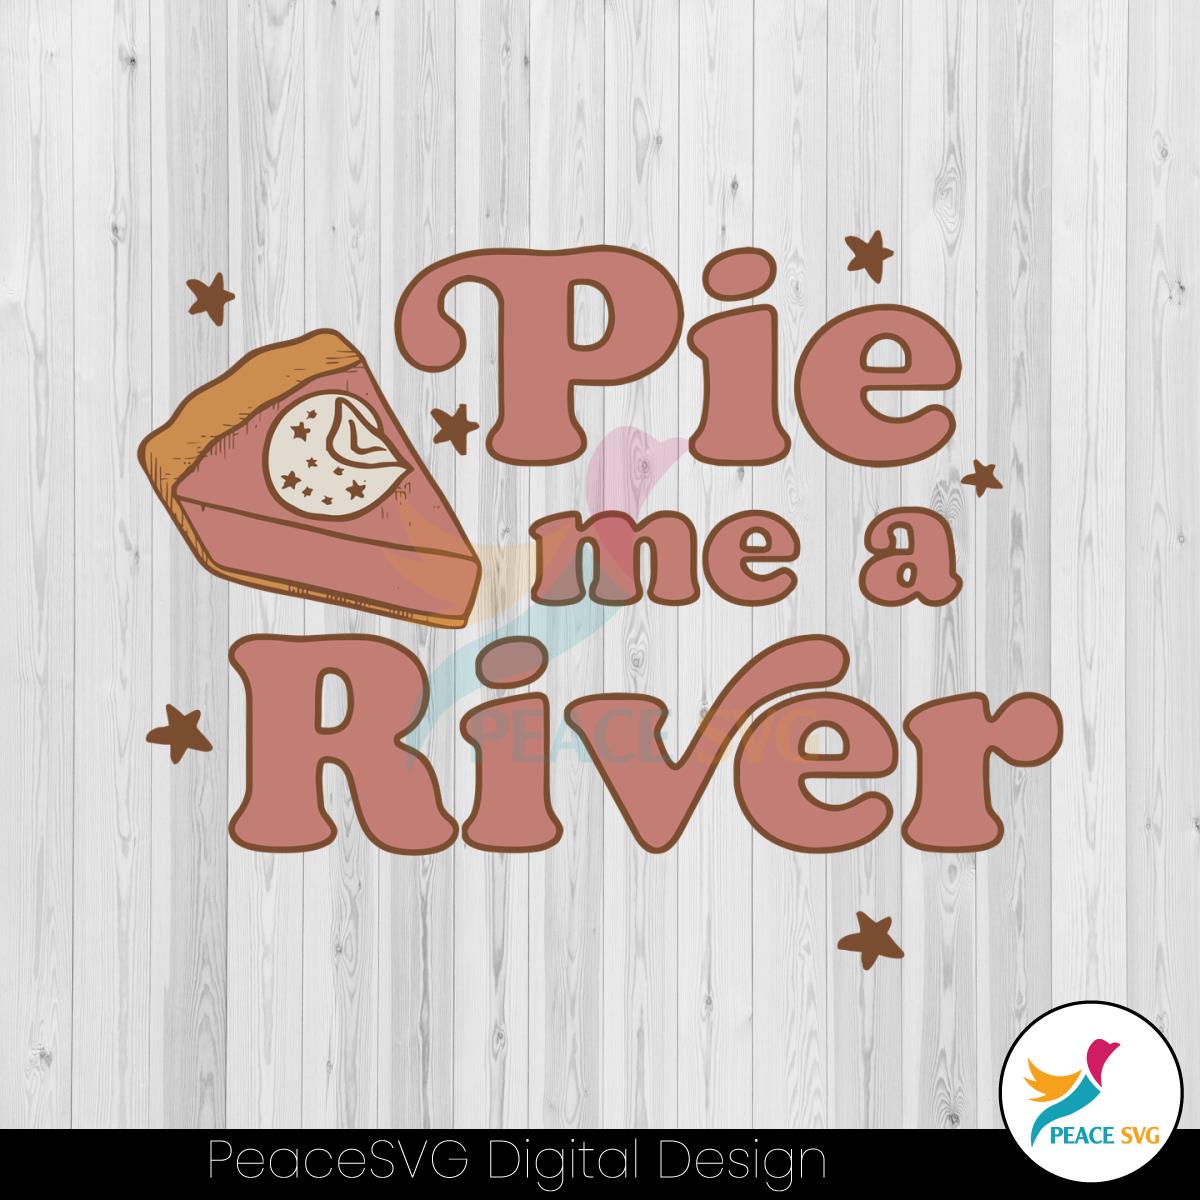 vintage-cake-pie-me-a-river-svg-graphic-design-file